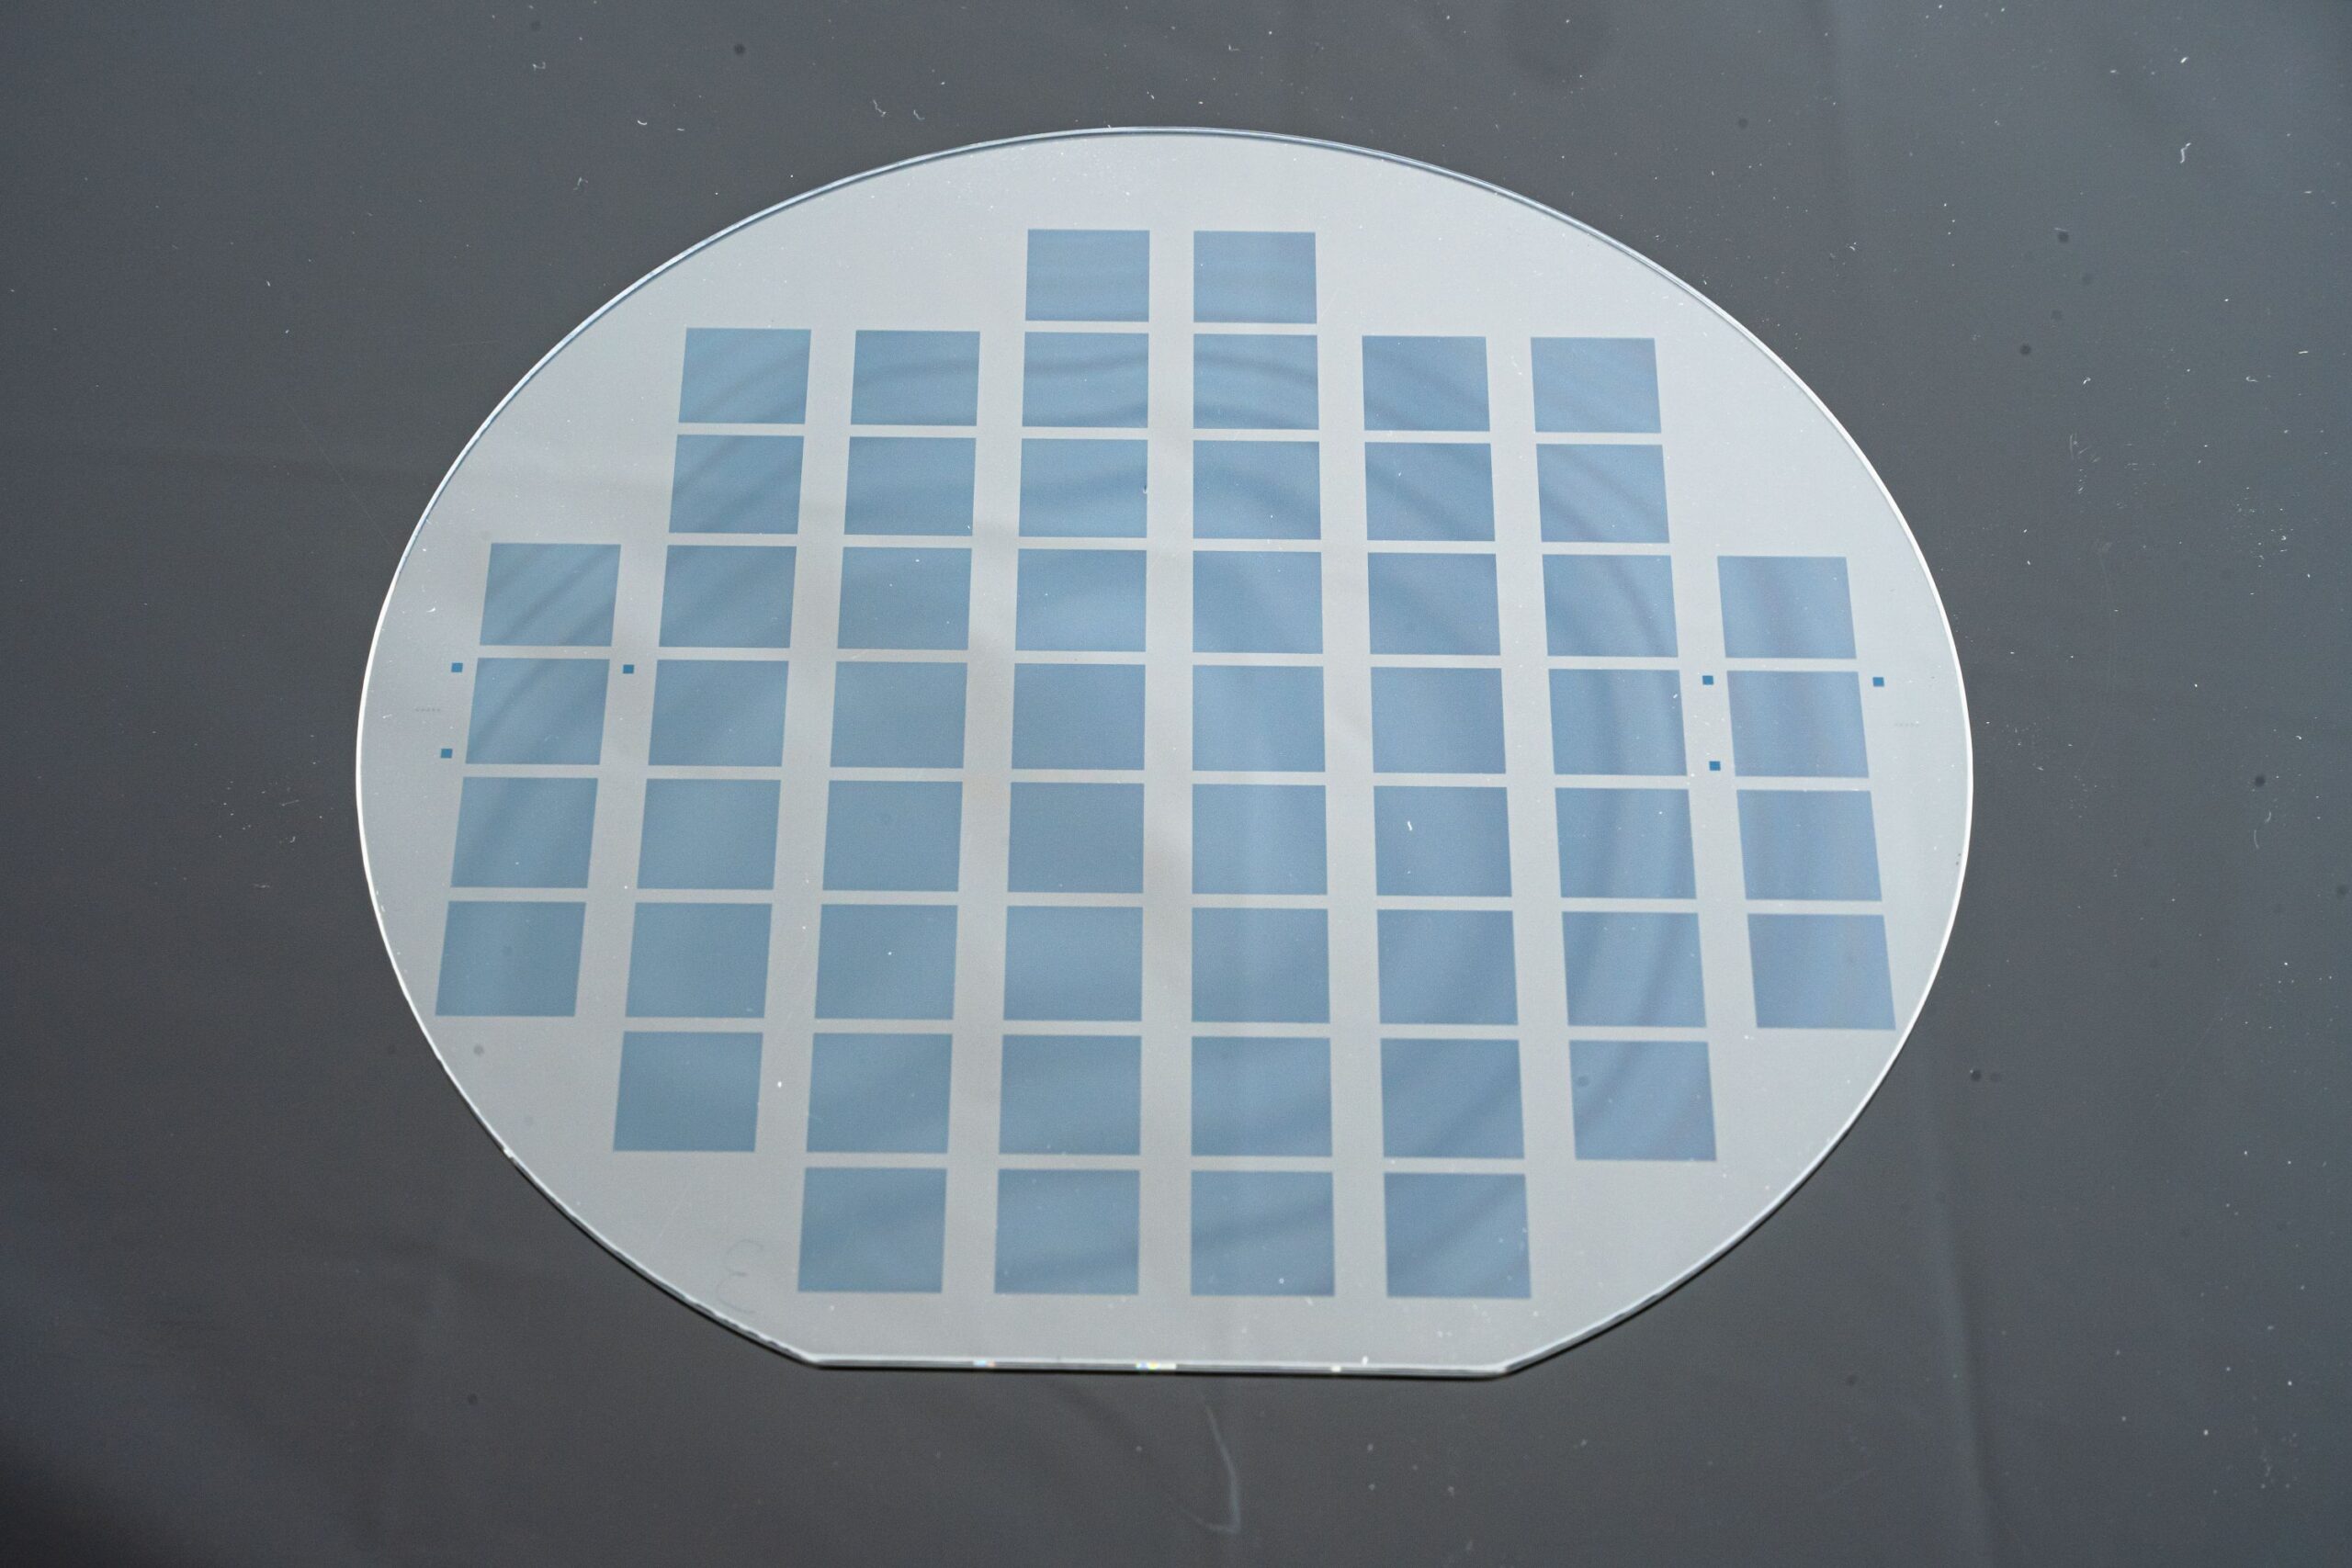 Neutral Density Stripe Filter